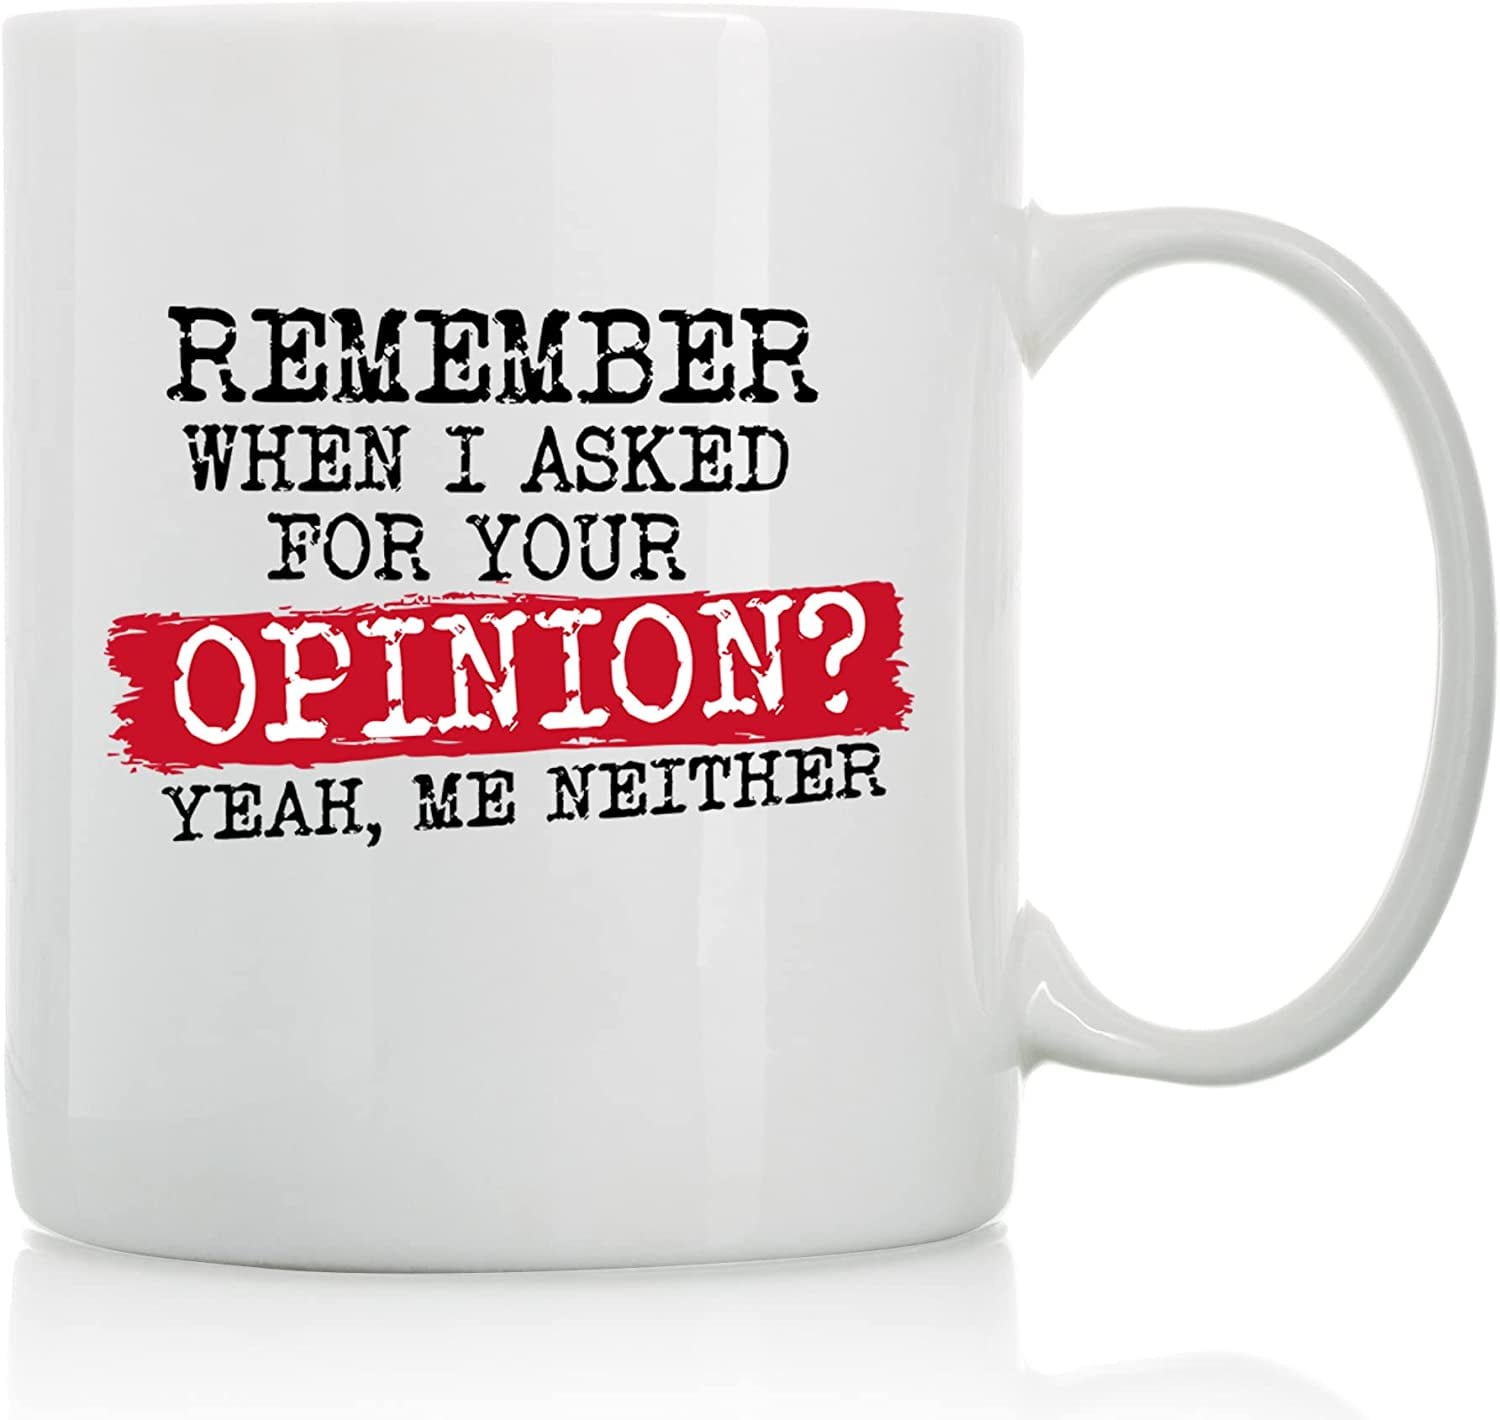 Funny Work Coffee Mug 16oz, Funny Coffee Cup, Personalized Coffee Mug,  Funny Coffee Mugs, Funny Quote Mug, Funny Gift, Coffee Gift, Work Mug 